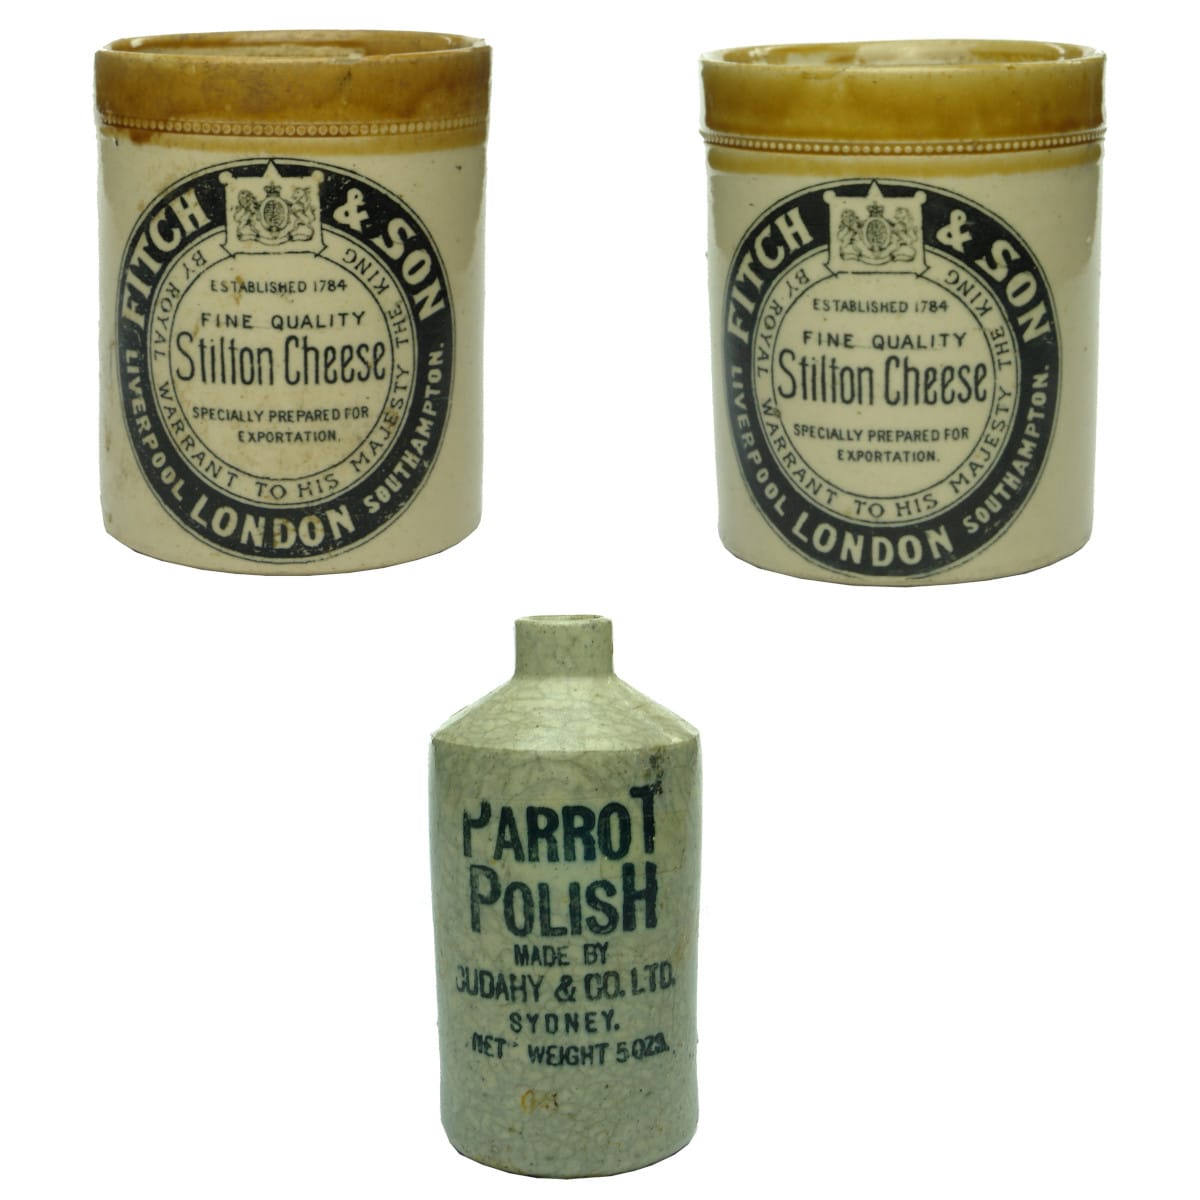 3 Items, 2 jars and a polish bottle. Both jars - Fitch & Son, London. Stilton Cheese; Cudahy, Sydney. Parrot Polish.